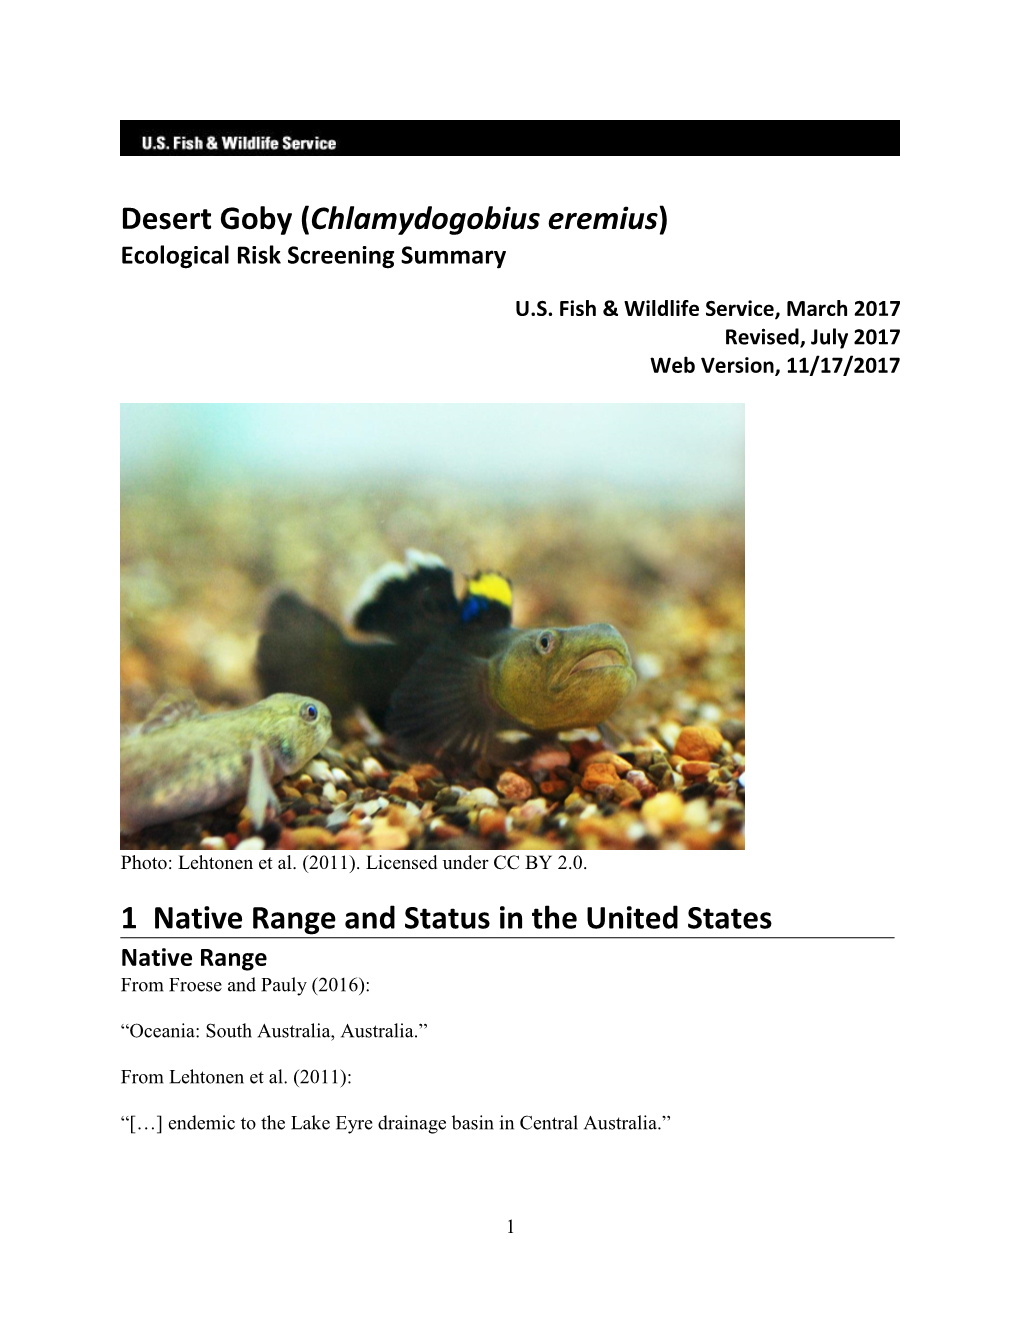 Desert Goby (Chlamydogobius Eremius) Ecological Risk Screening Summary